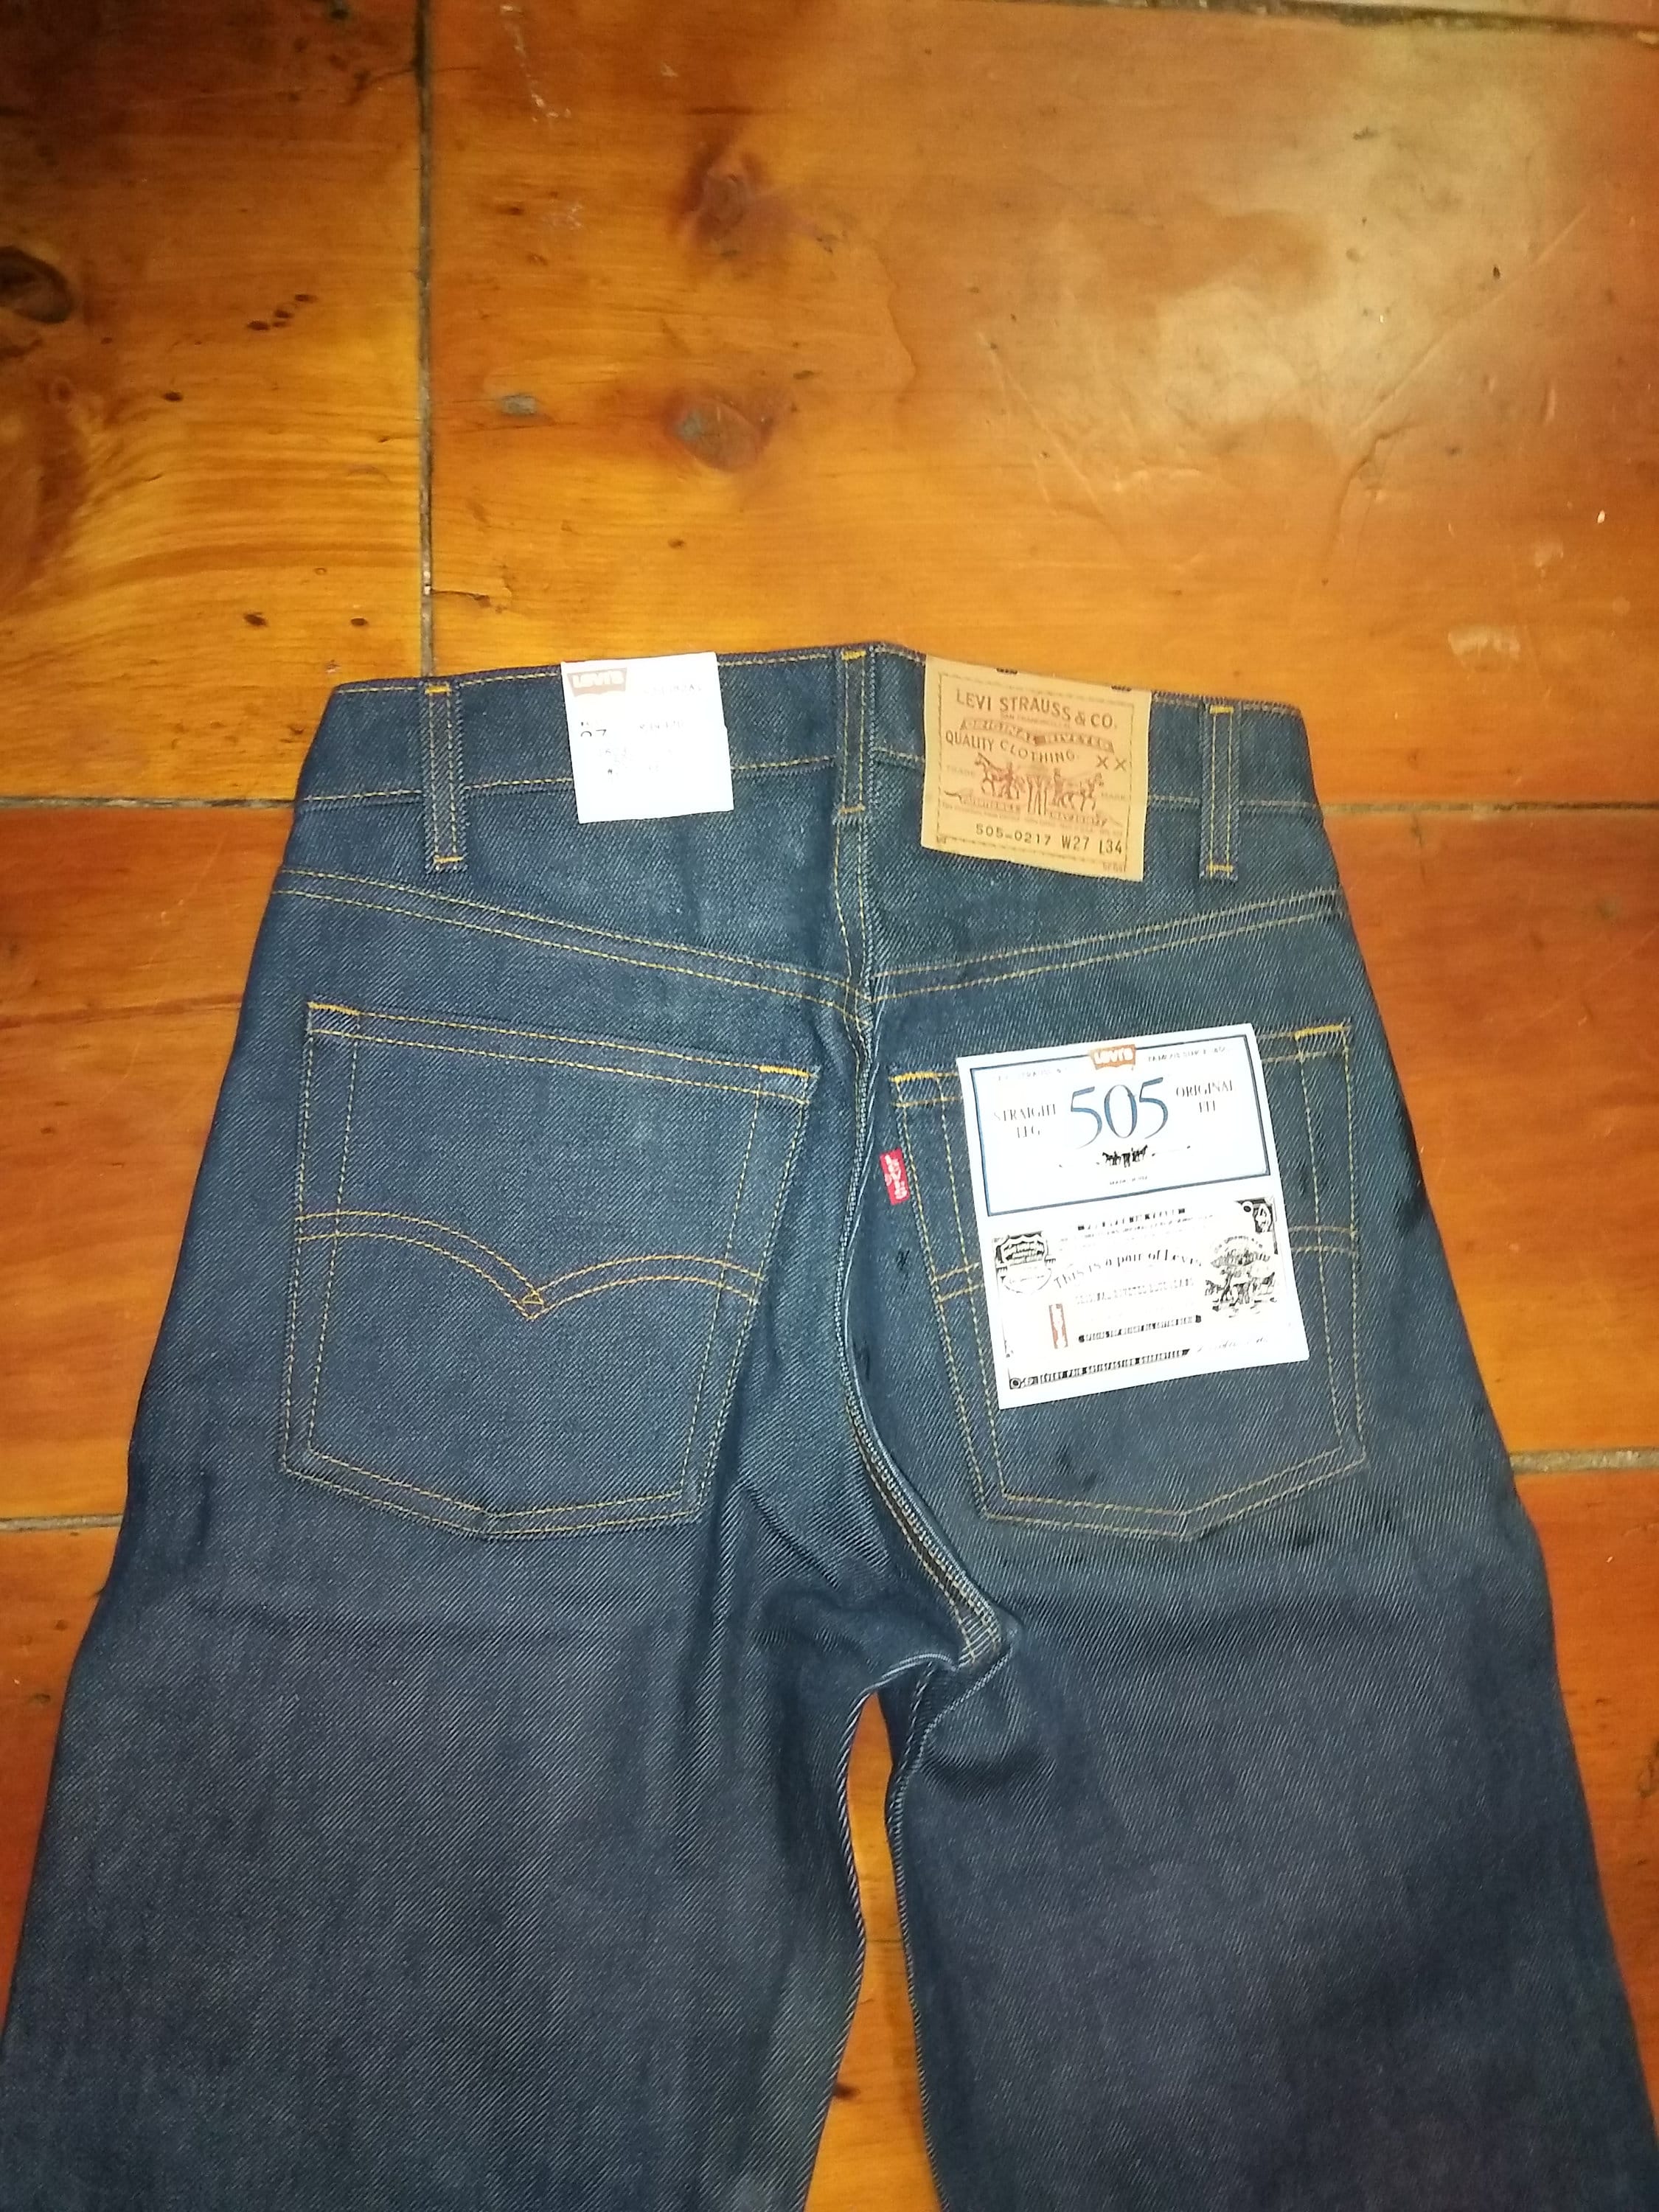 Levi 505 vintage deadstock jean men rigid unwashed straight | Etsy